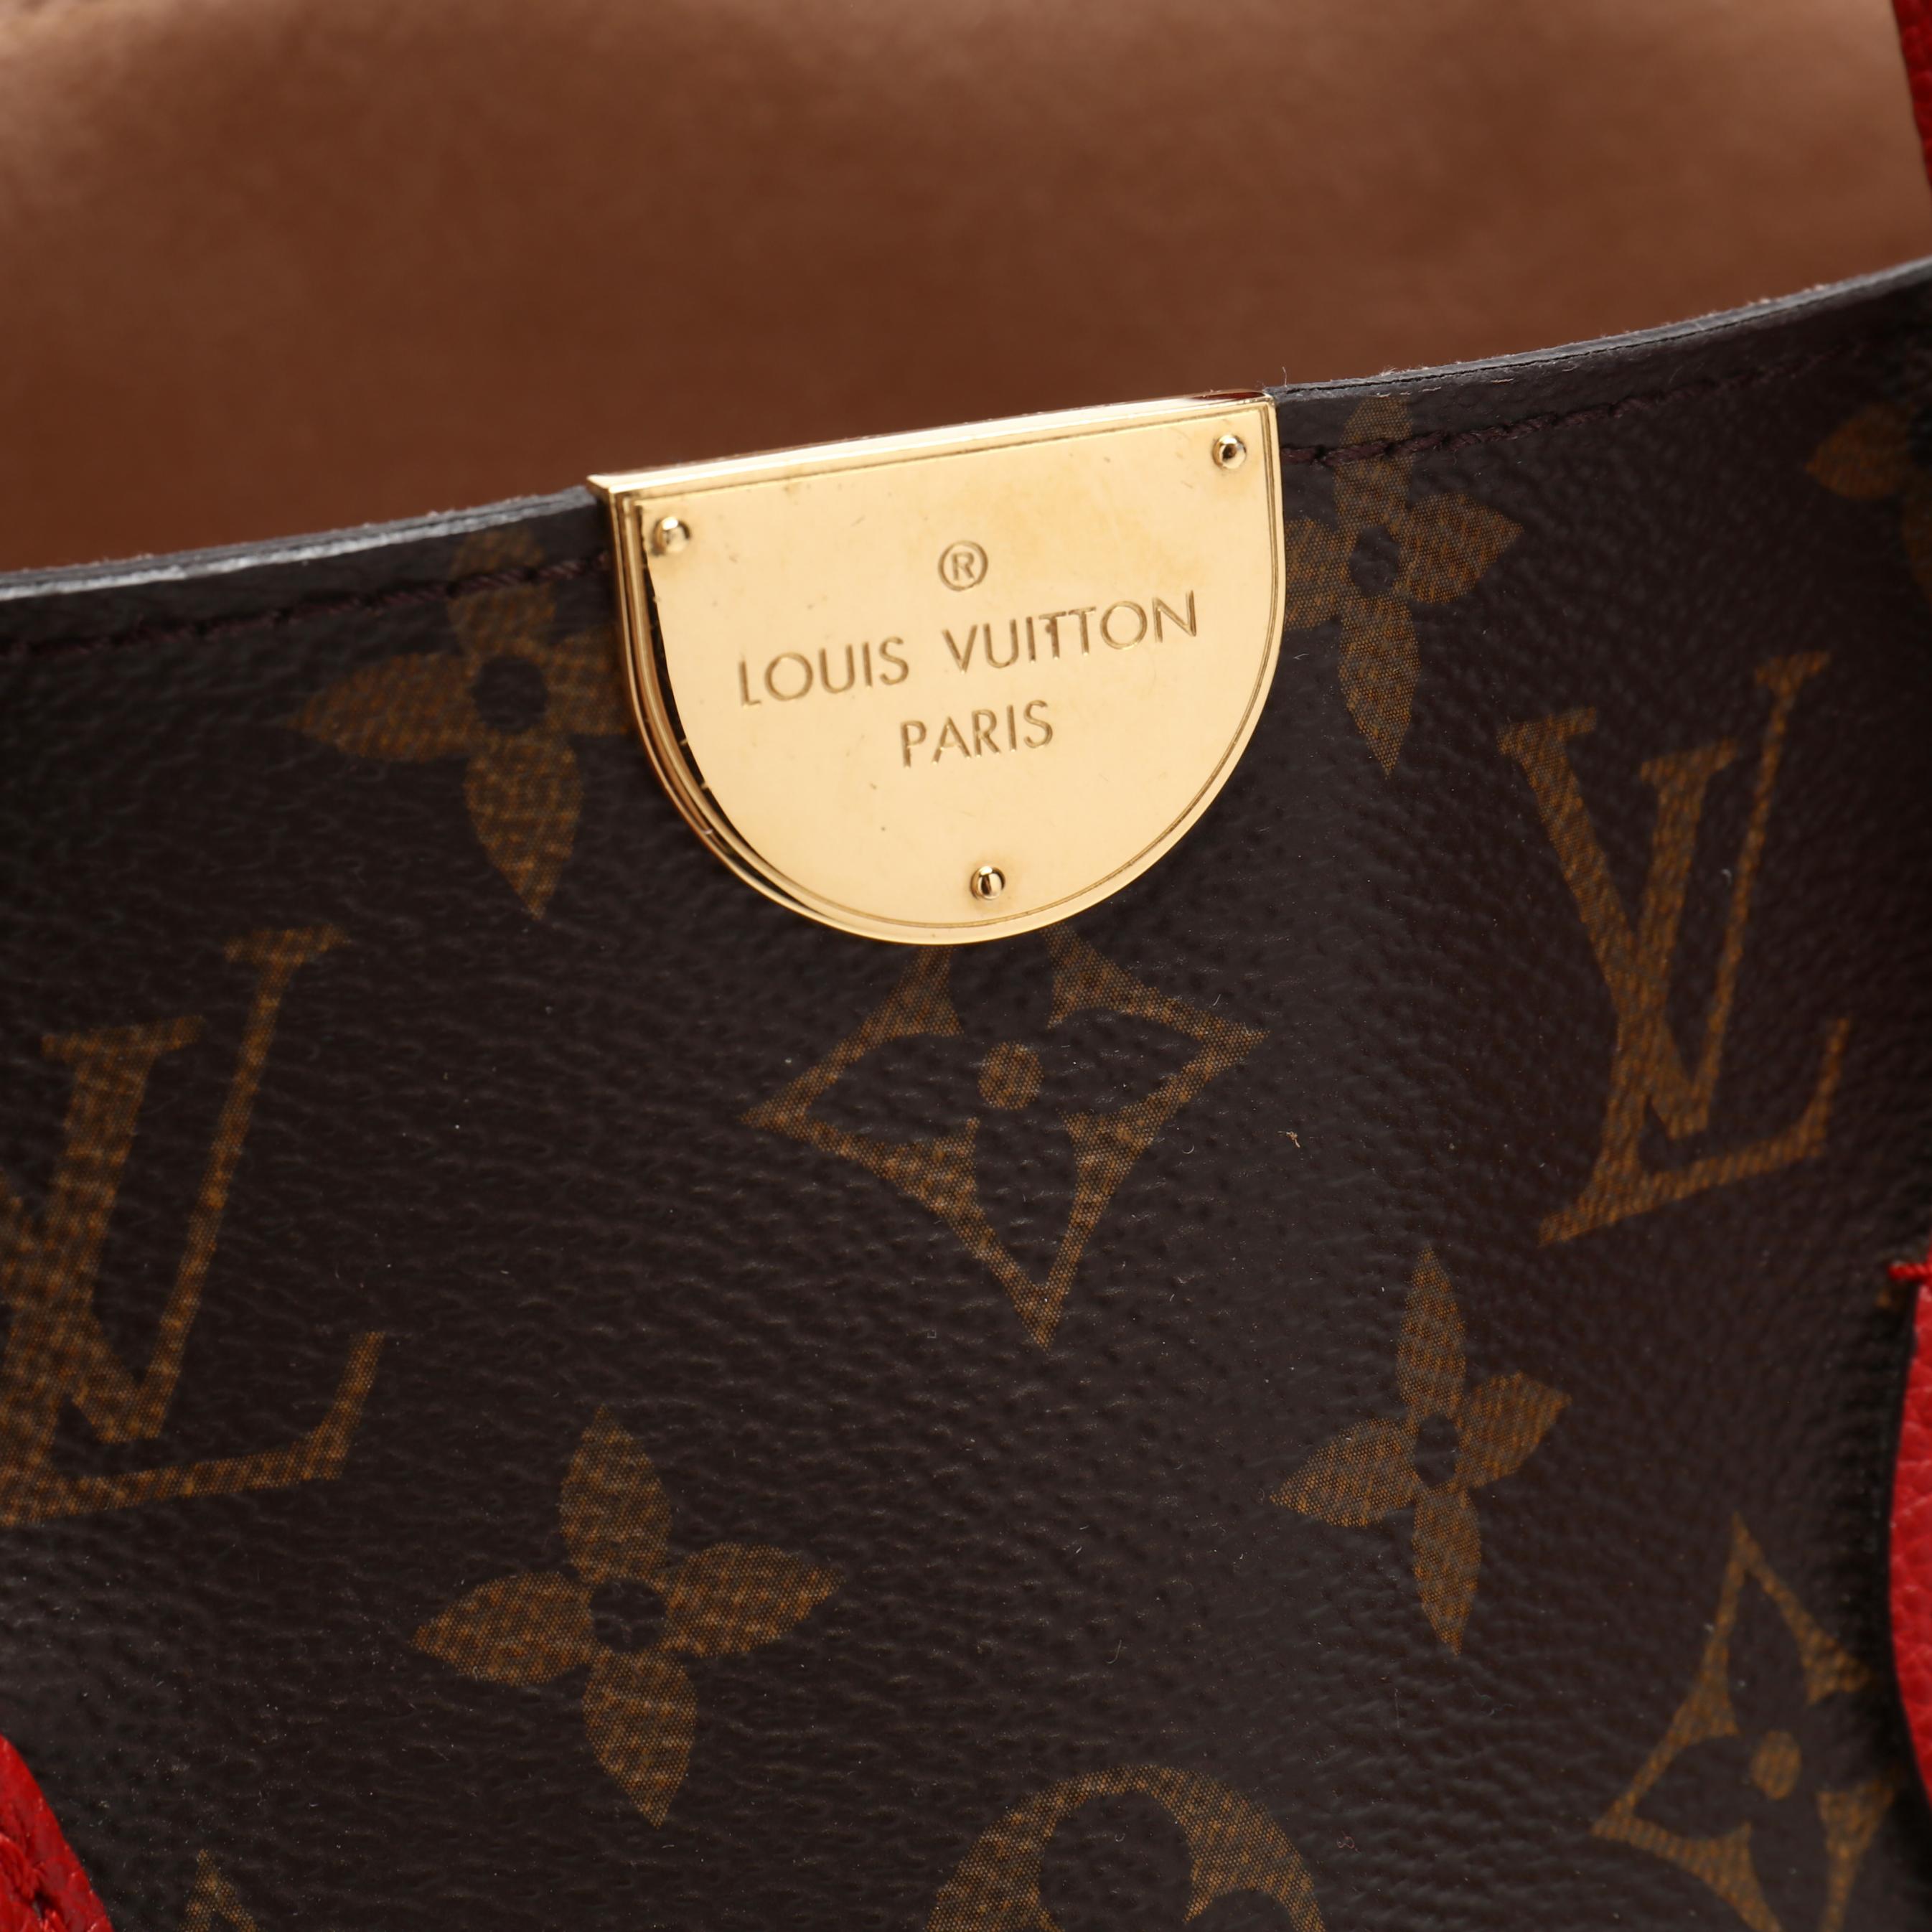 Sold at Auction: Louis Vuitton Graceful MM Monogram Tote